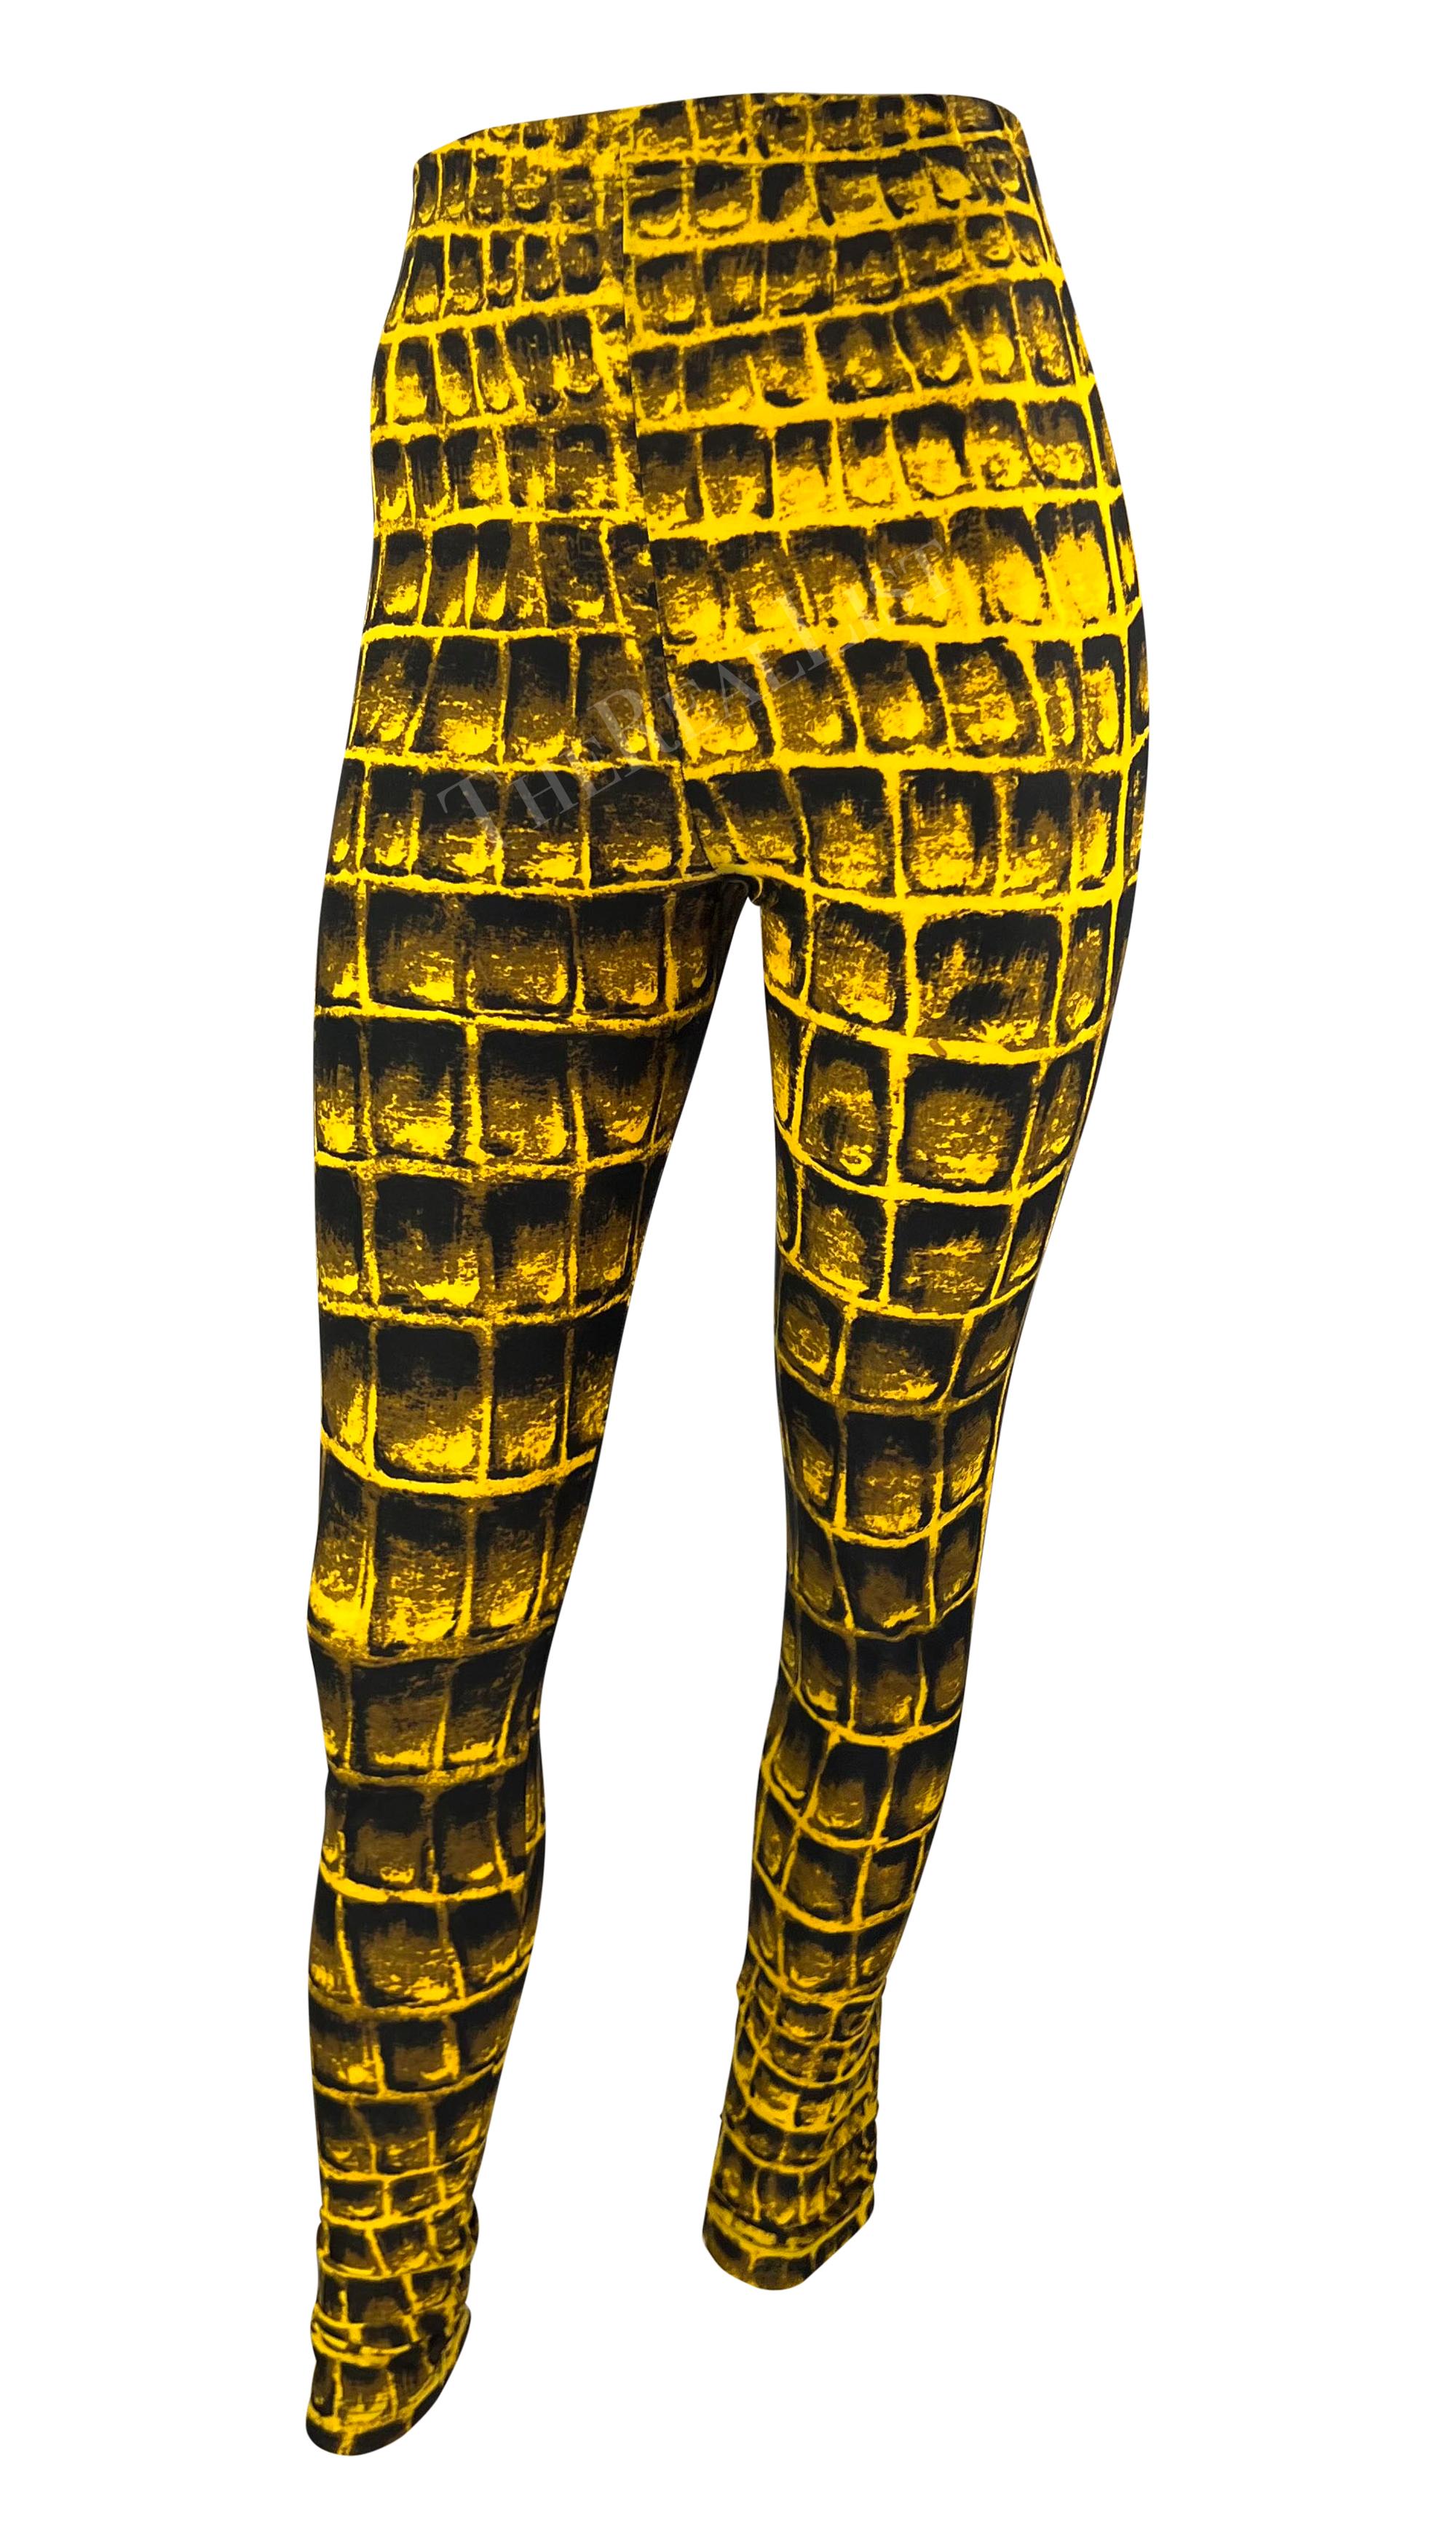 S/S 1992 Gianni Versace Runway Yellow Black Crocodile Print Leggings Tights For Sale 1